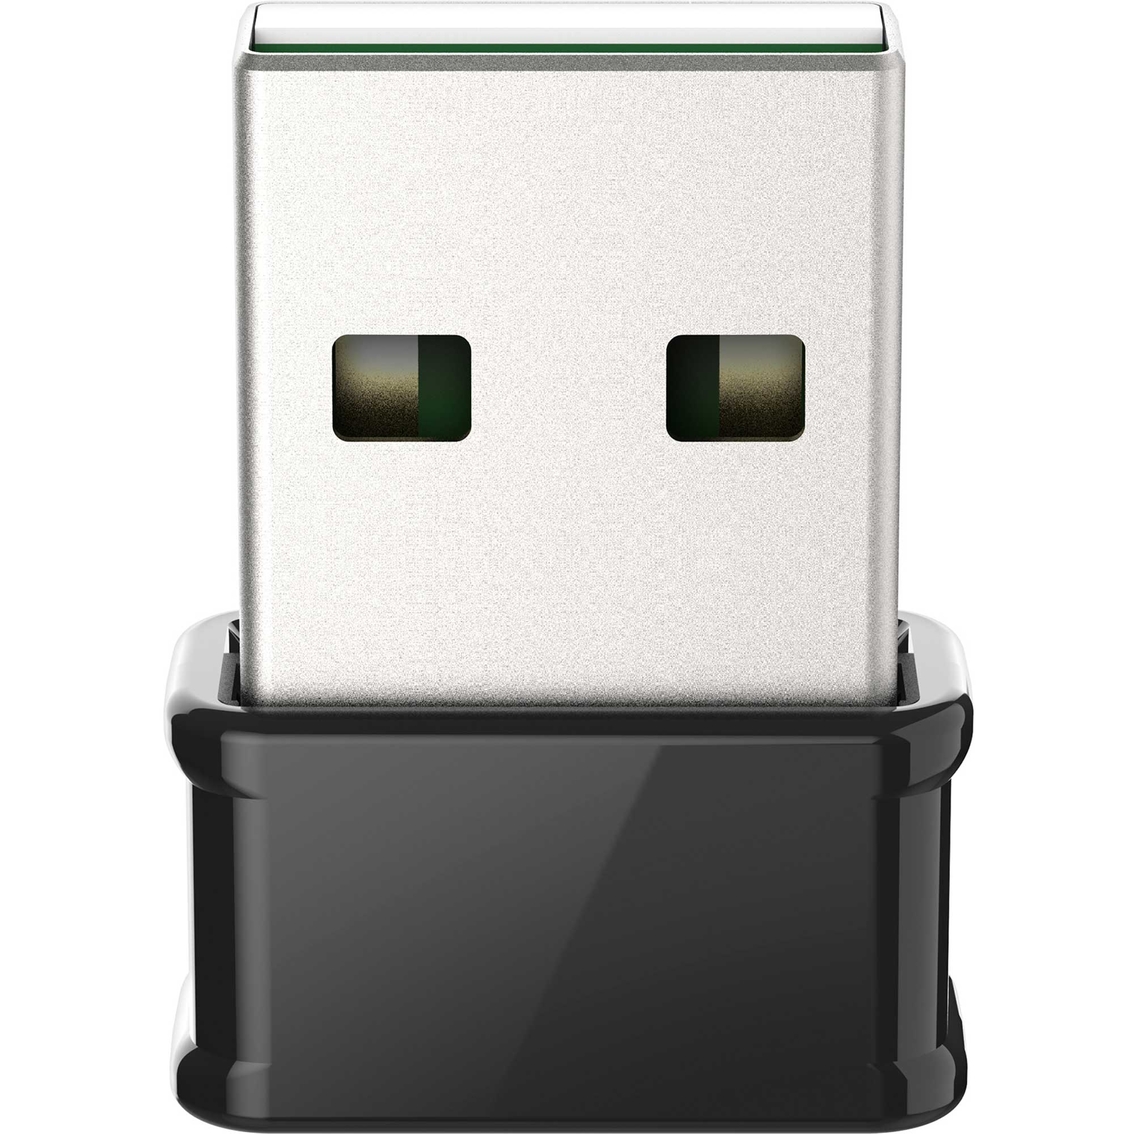 D-Link AC1300 MU-MIMO WiFi Nano USB Adapter - Image 2 of 4